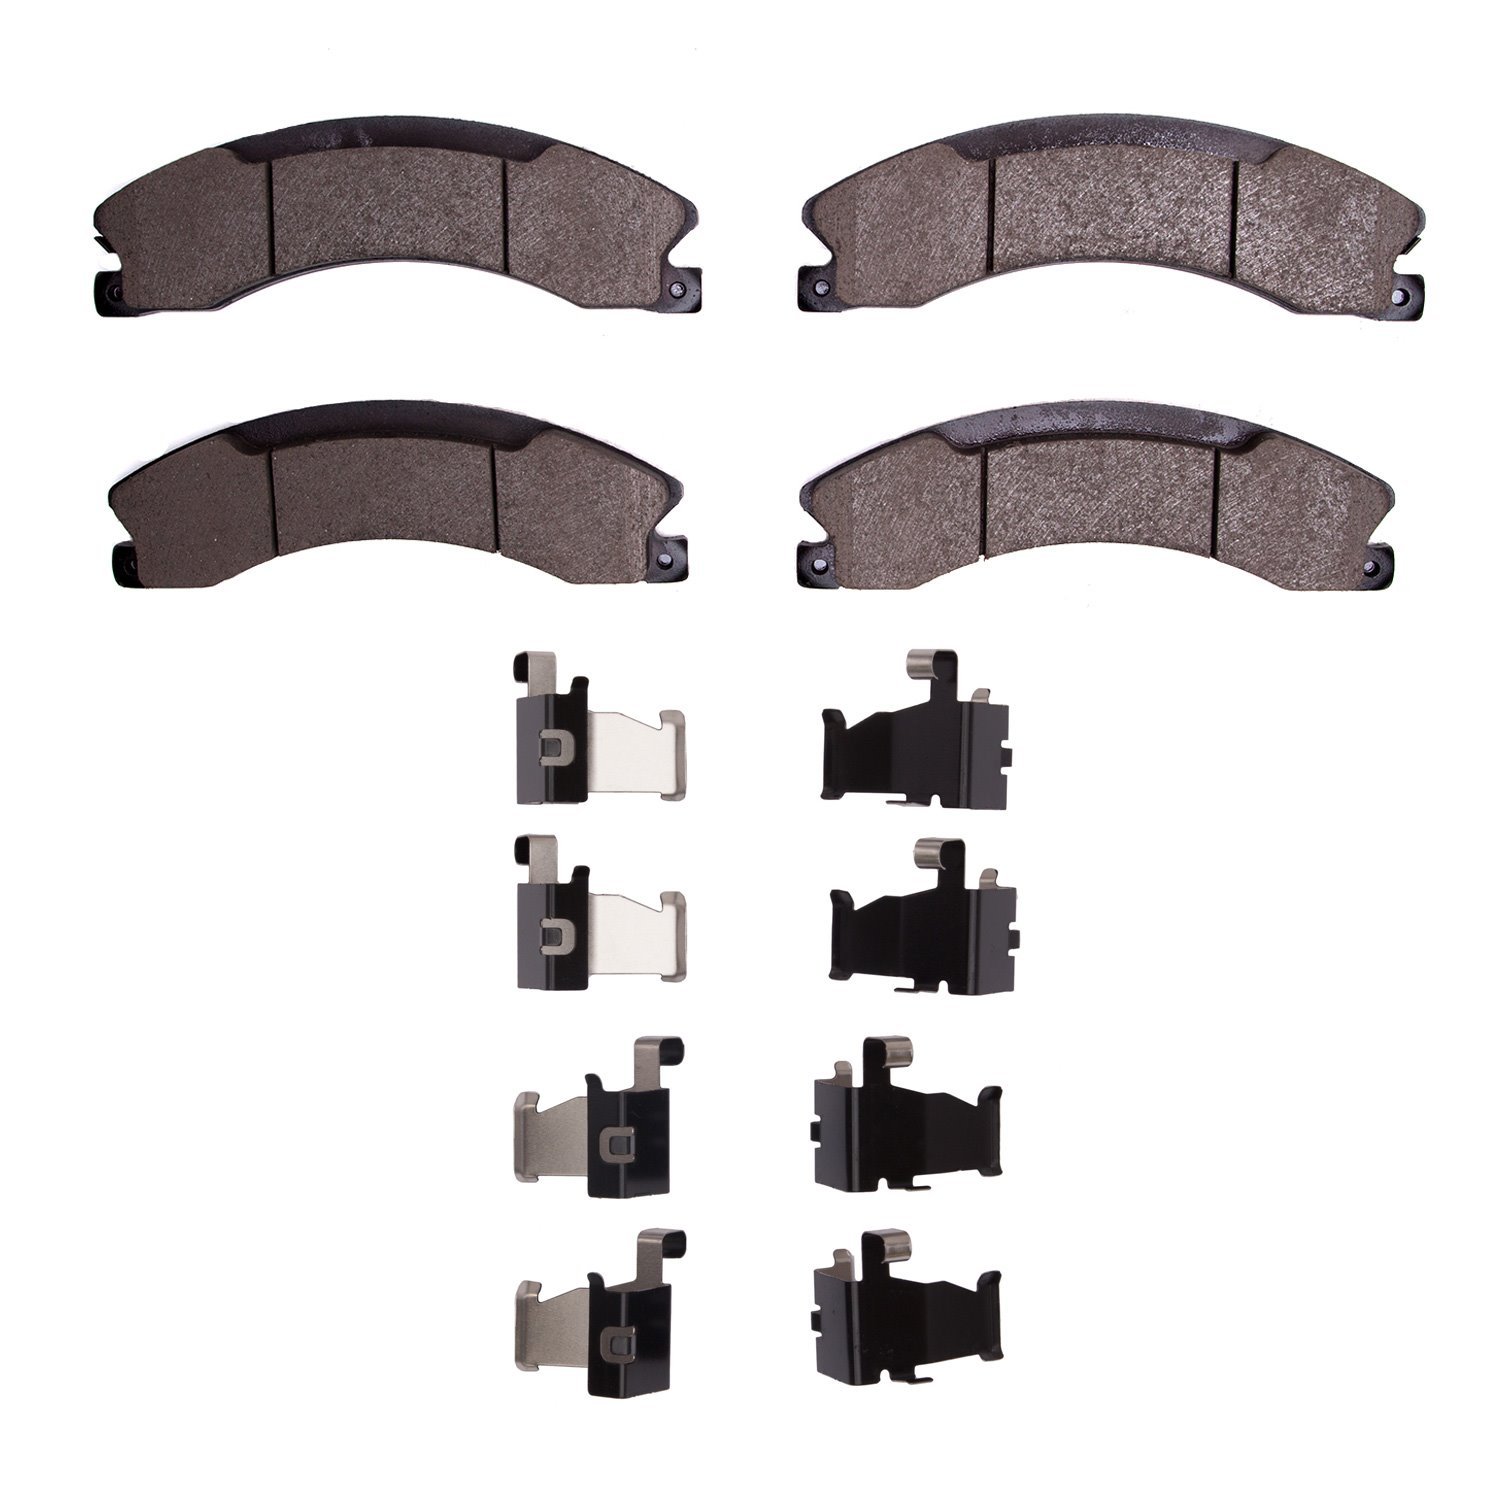 1310-1565-11 3000-Series Ceramic Brake Pads & Hardware Kit, Fits Select Infiniti/Nissan, Position: Rear,Rr